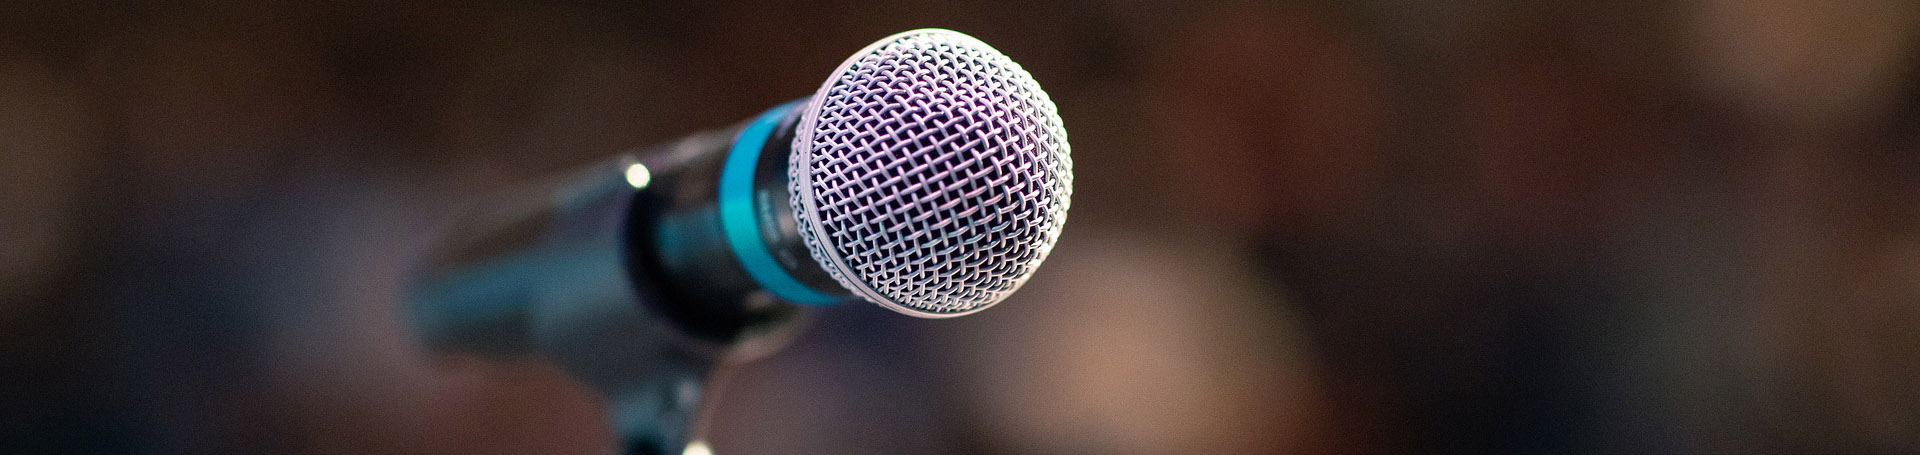 Microphone close-up, source: pixabay.com